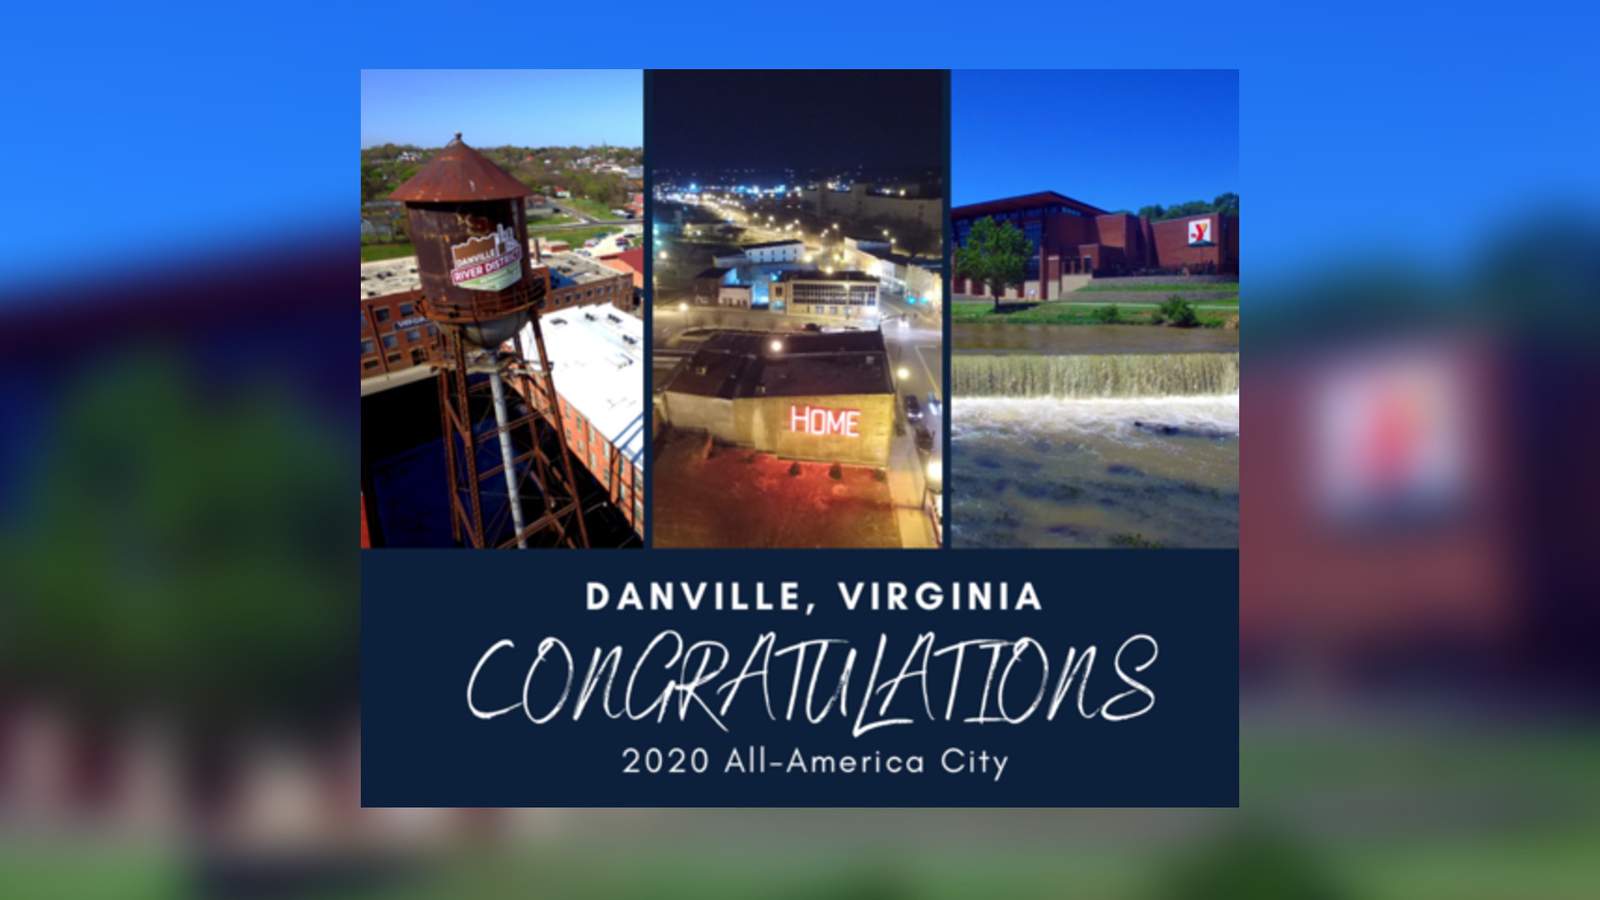 Danville, Virginia named 2020 All-America City